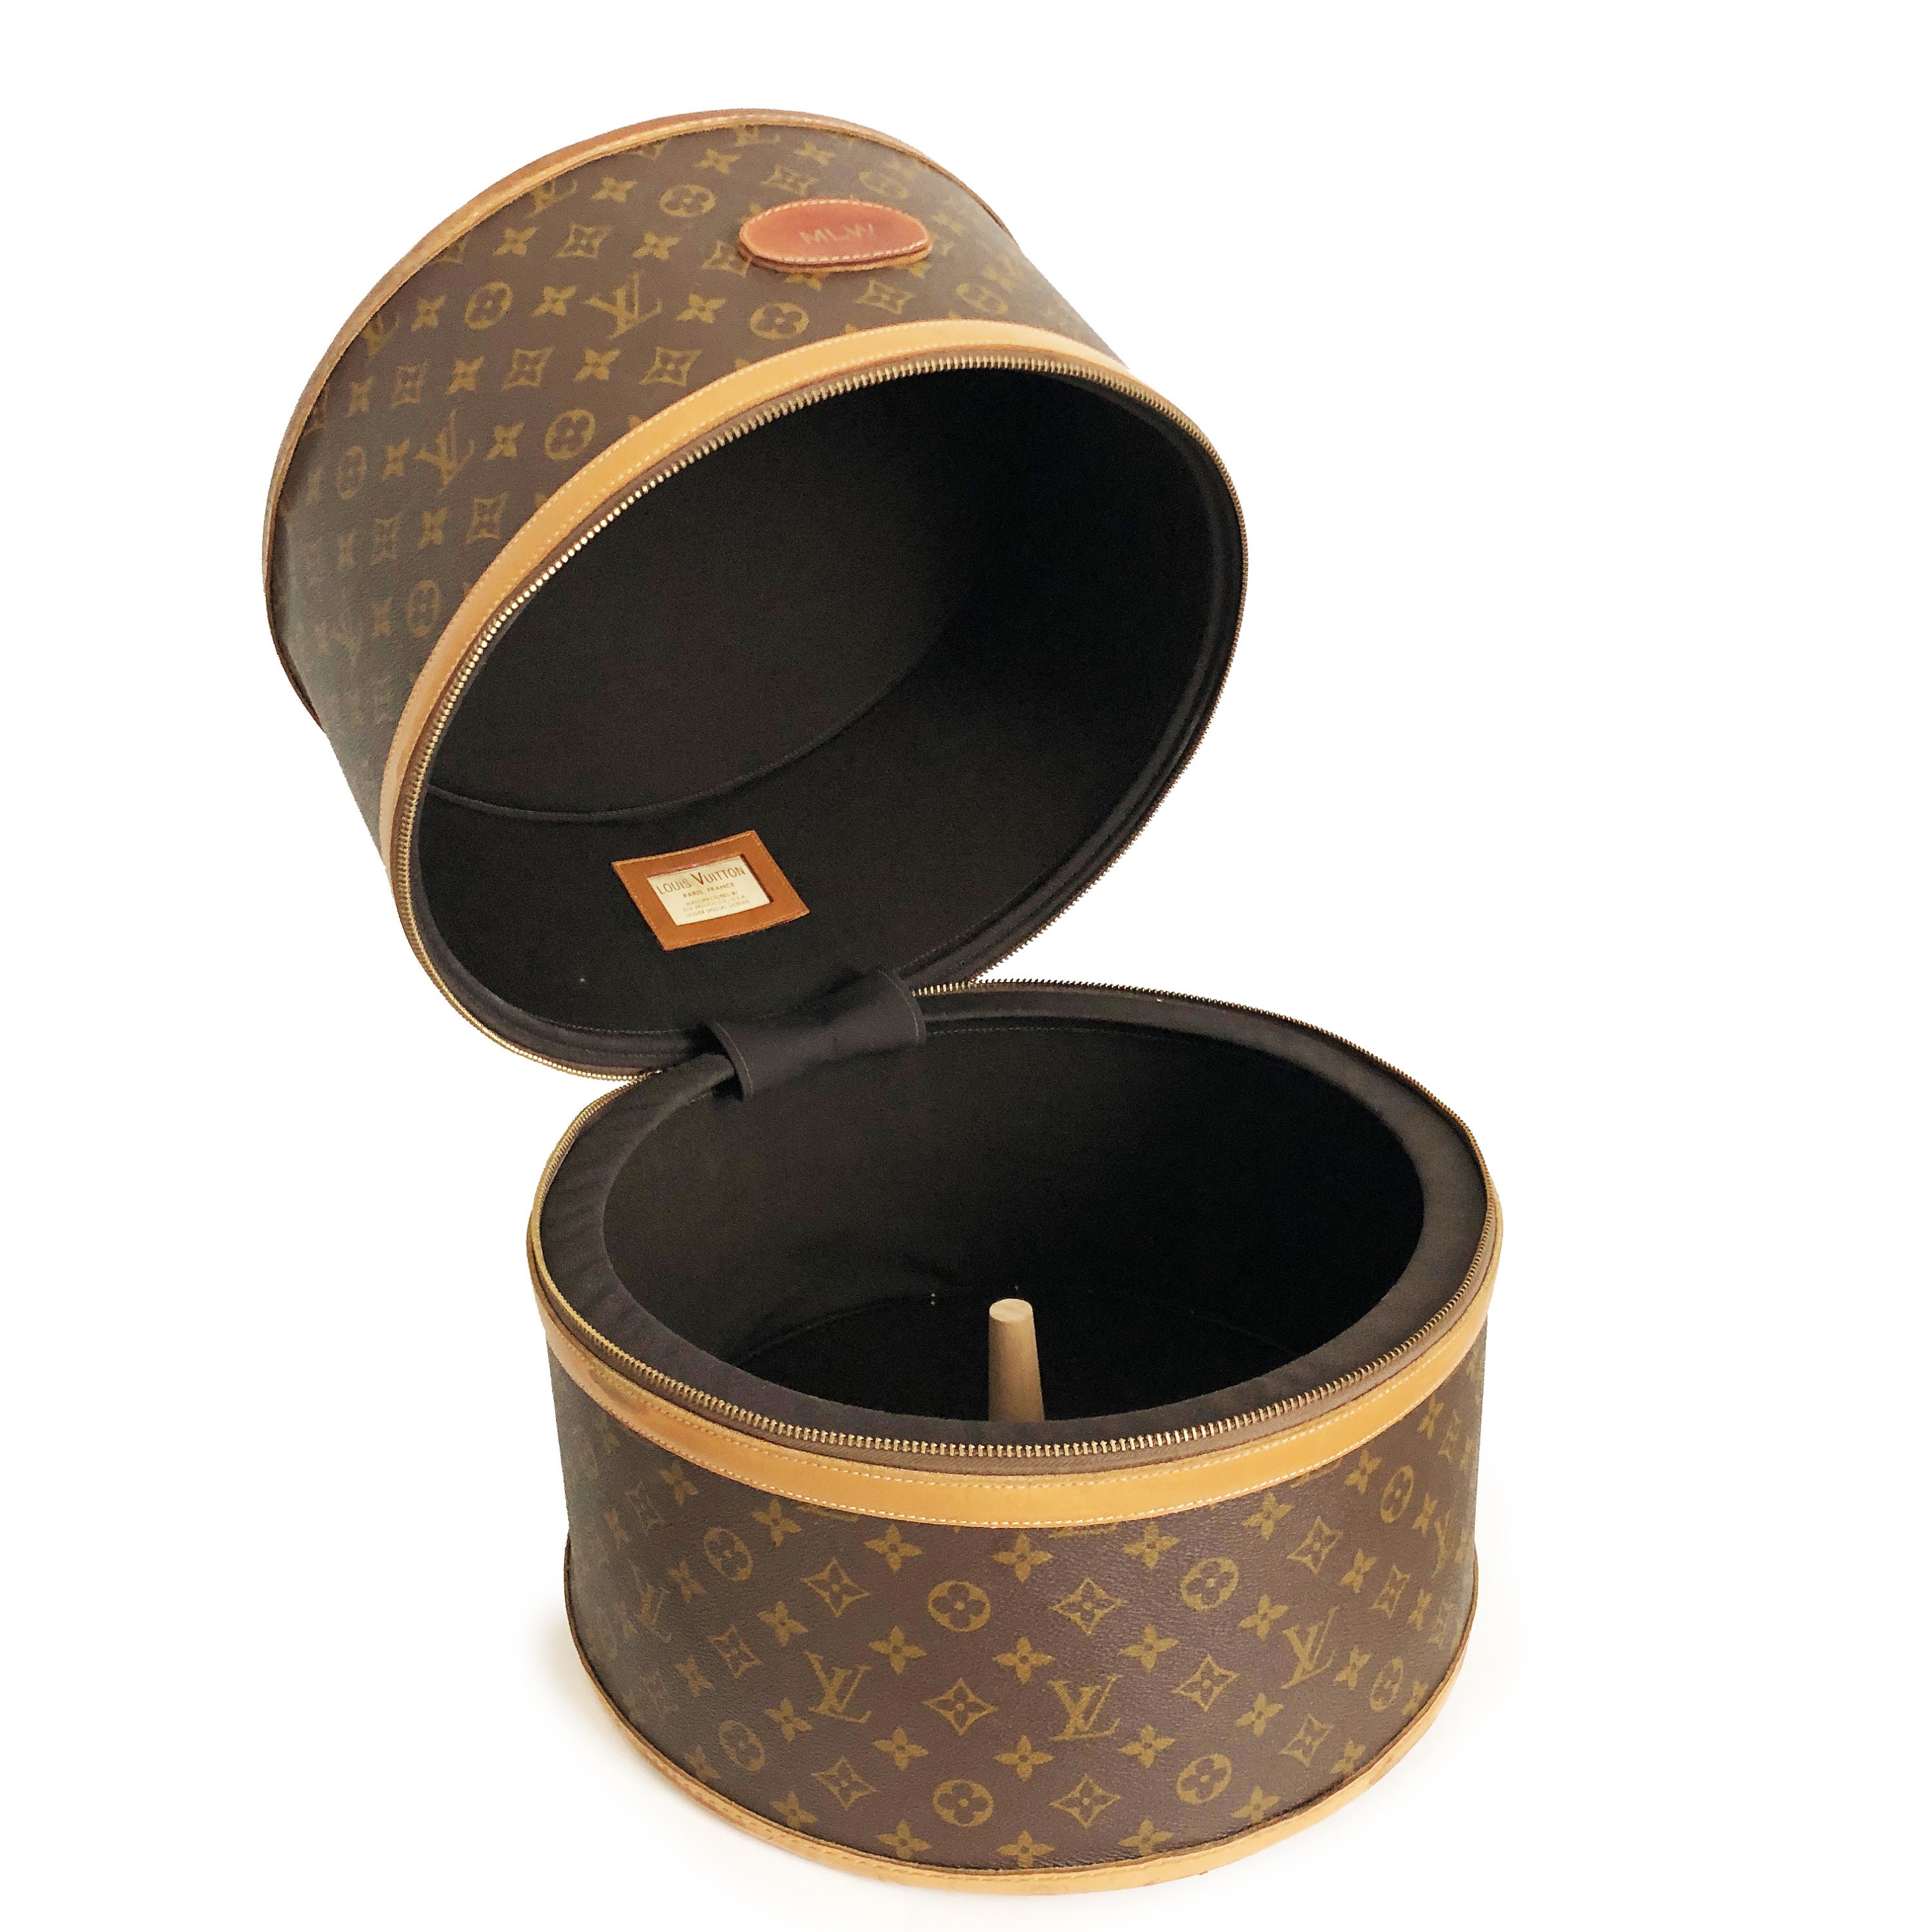 Louis Vuitton x The French Company Boite Chapeaux Round Hat Box